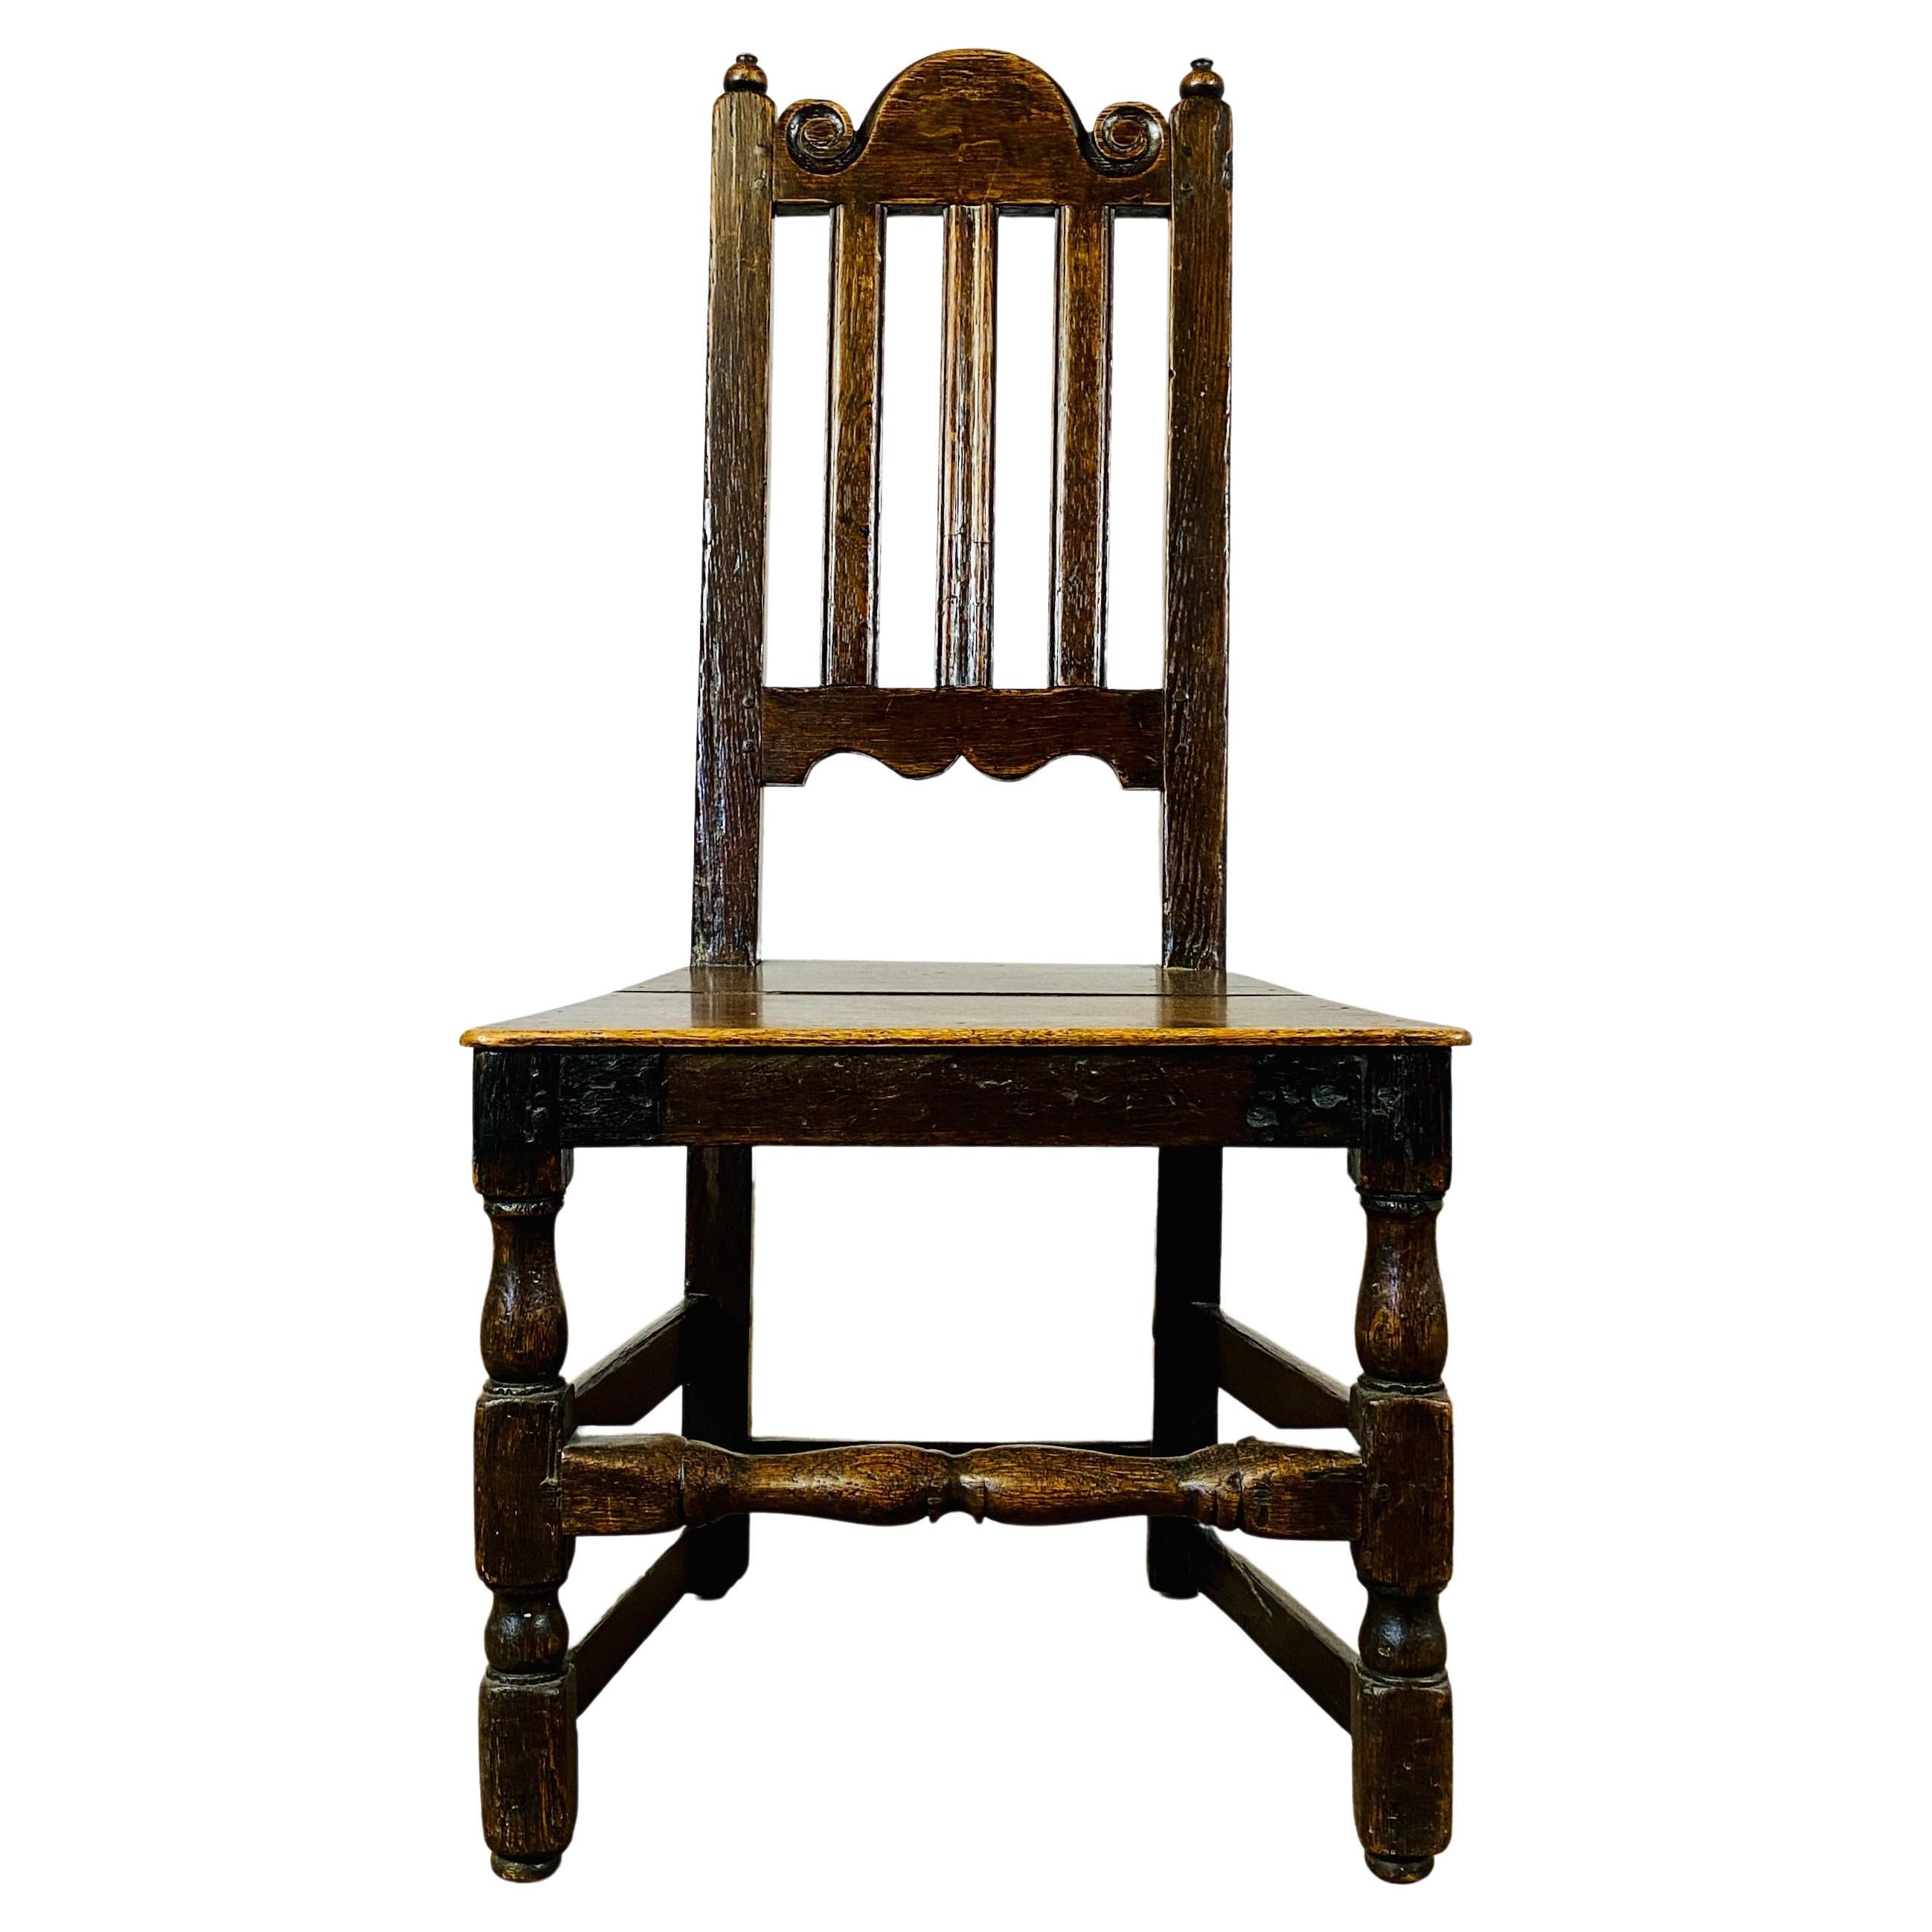 Antique English Oak 17th Century Hall Chair